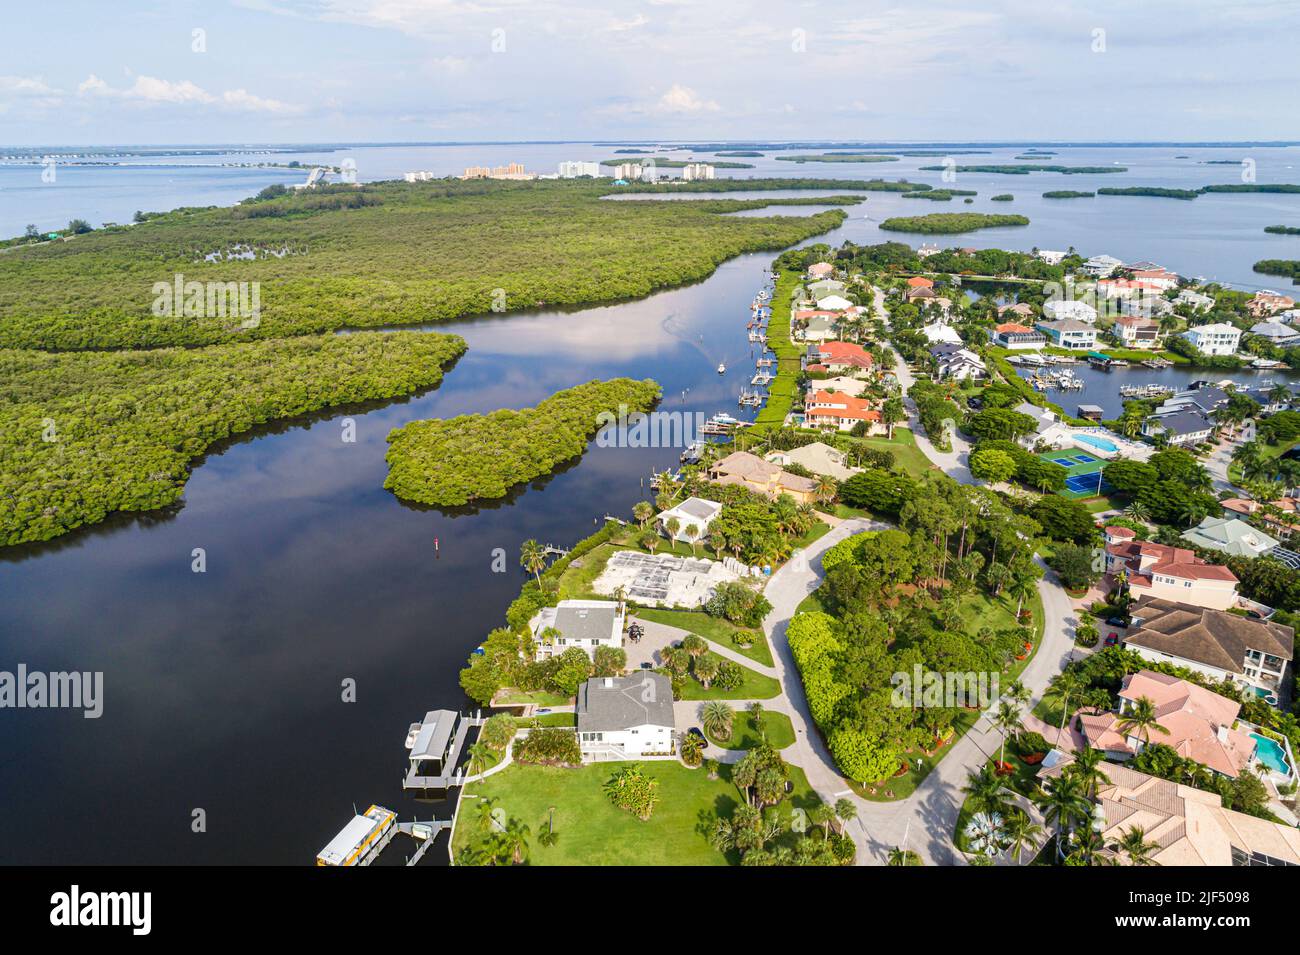 Fort Ft. Myers Florida, Connie Mack Island cerrado comunidad privada casas desarrollo invadment, humedales Punta Rassa Cove Golfo de México, aeria Foto de stock